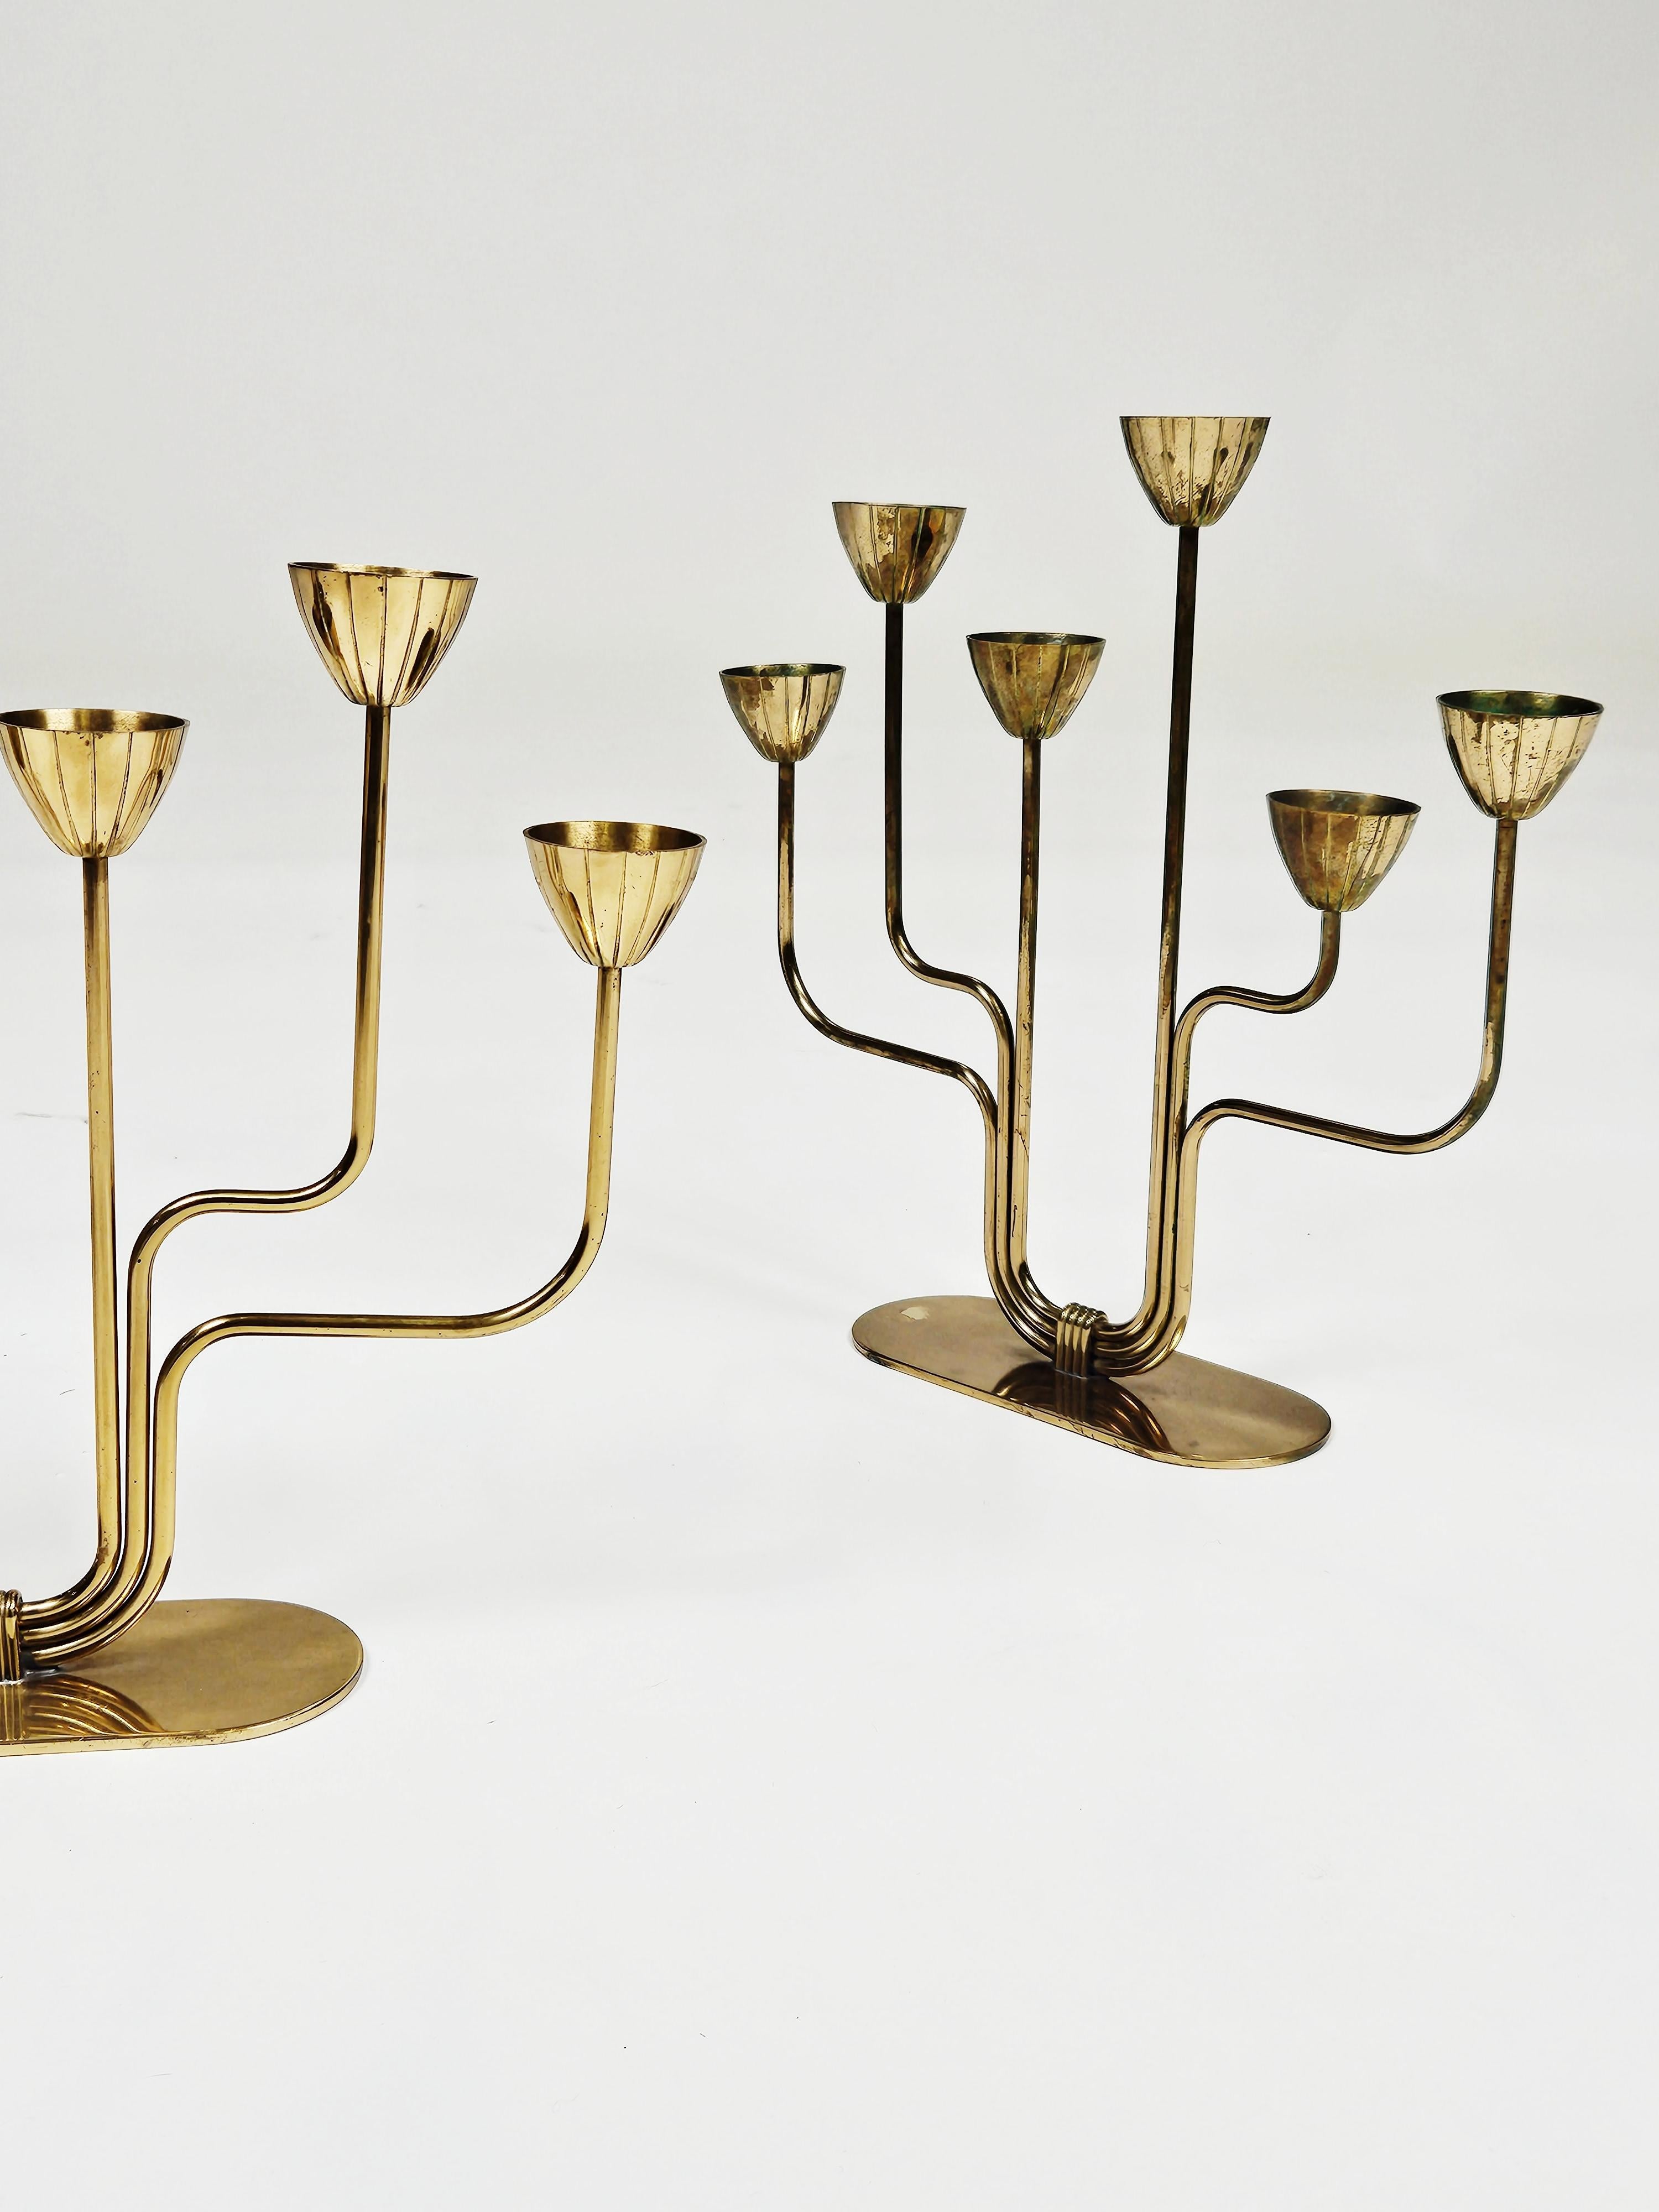 Scandinavian Modern Swedish modern brass candelabras by Gunnar Ander for Ystad Metall, Sweden, 1950s For Sale